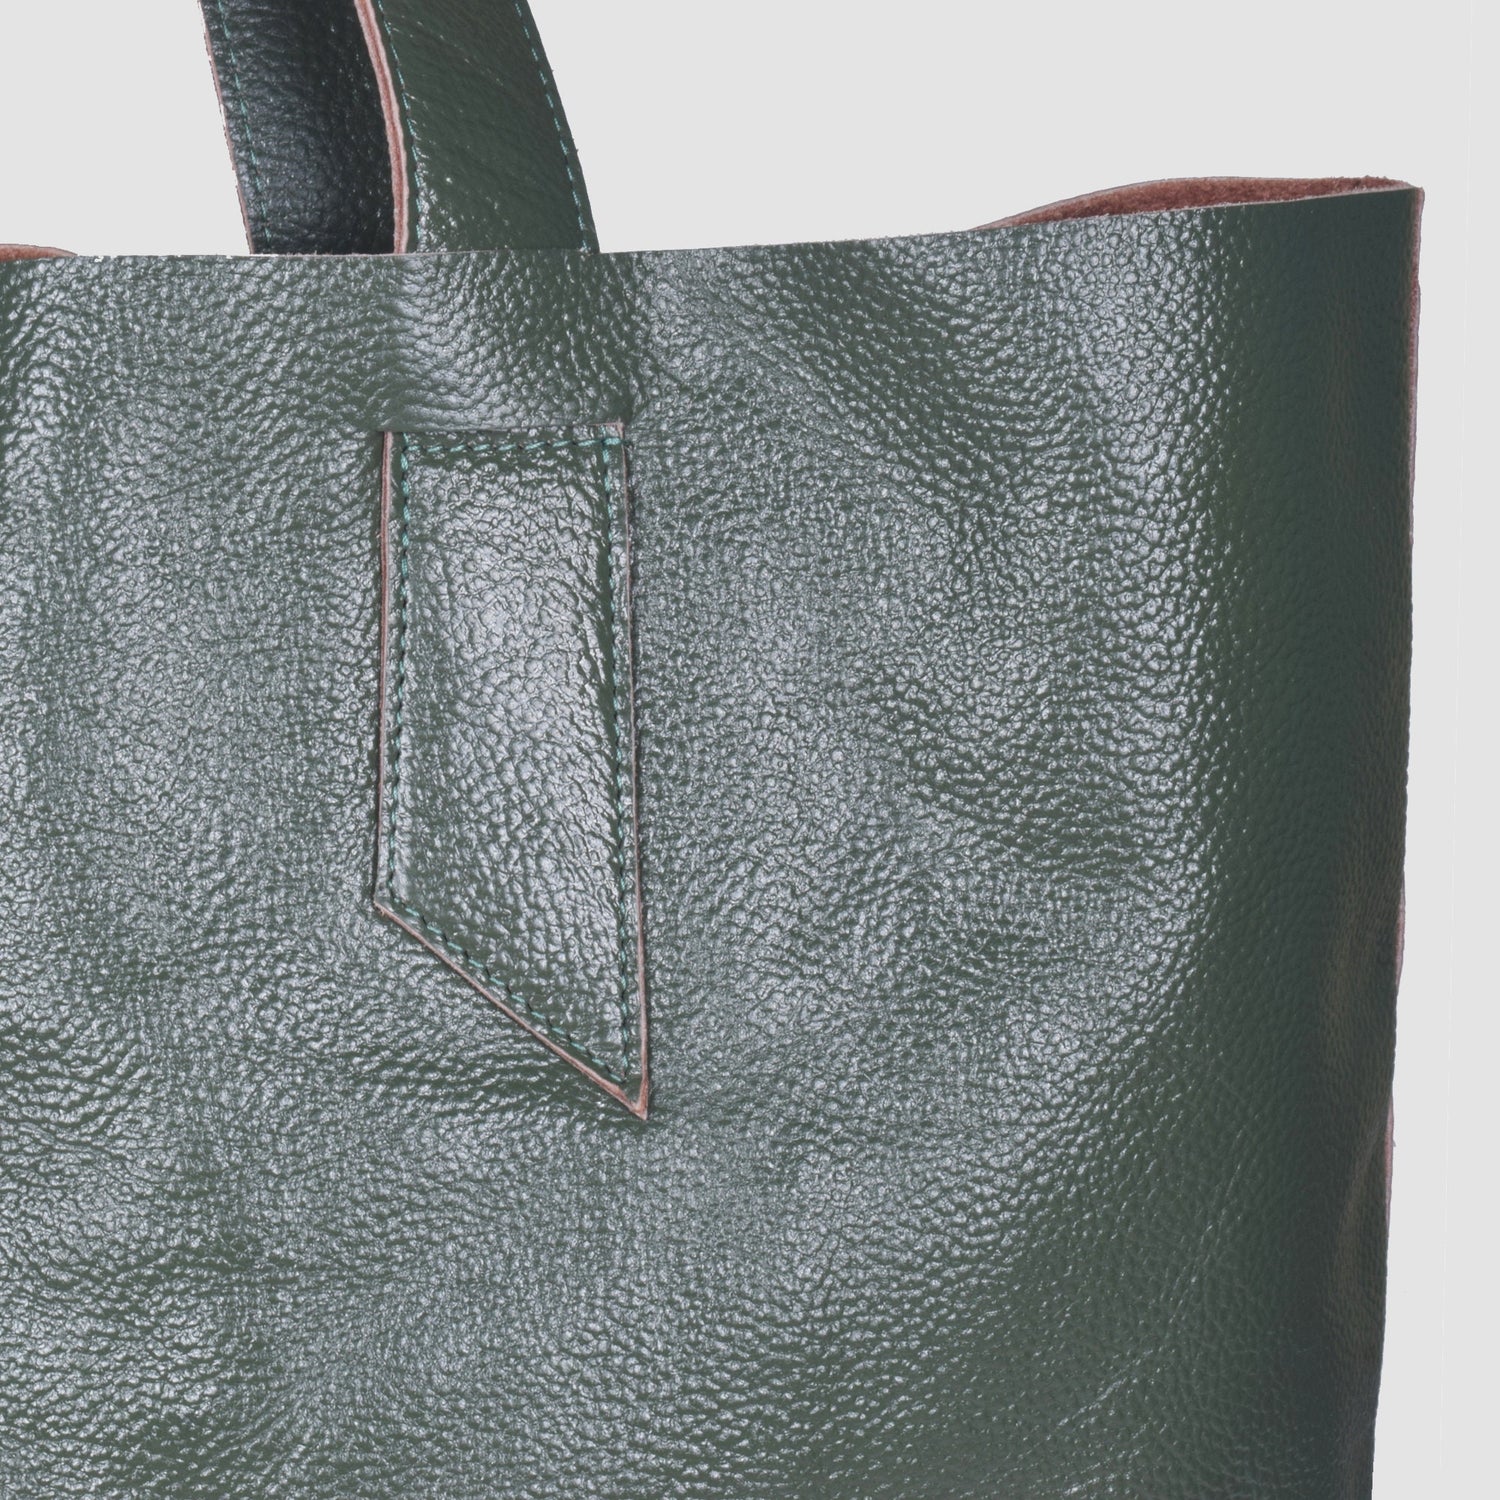 Crossbody Bag for Women - Leather Small Shoulder Bag Ladies Handbags Purse  with Adjustable Strap-Dark Green - Walmart.com